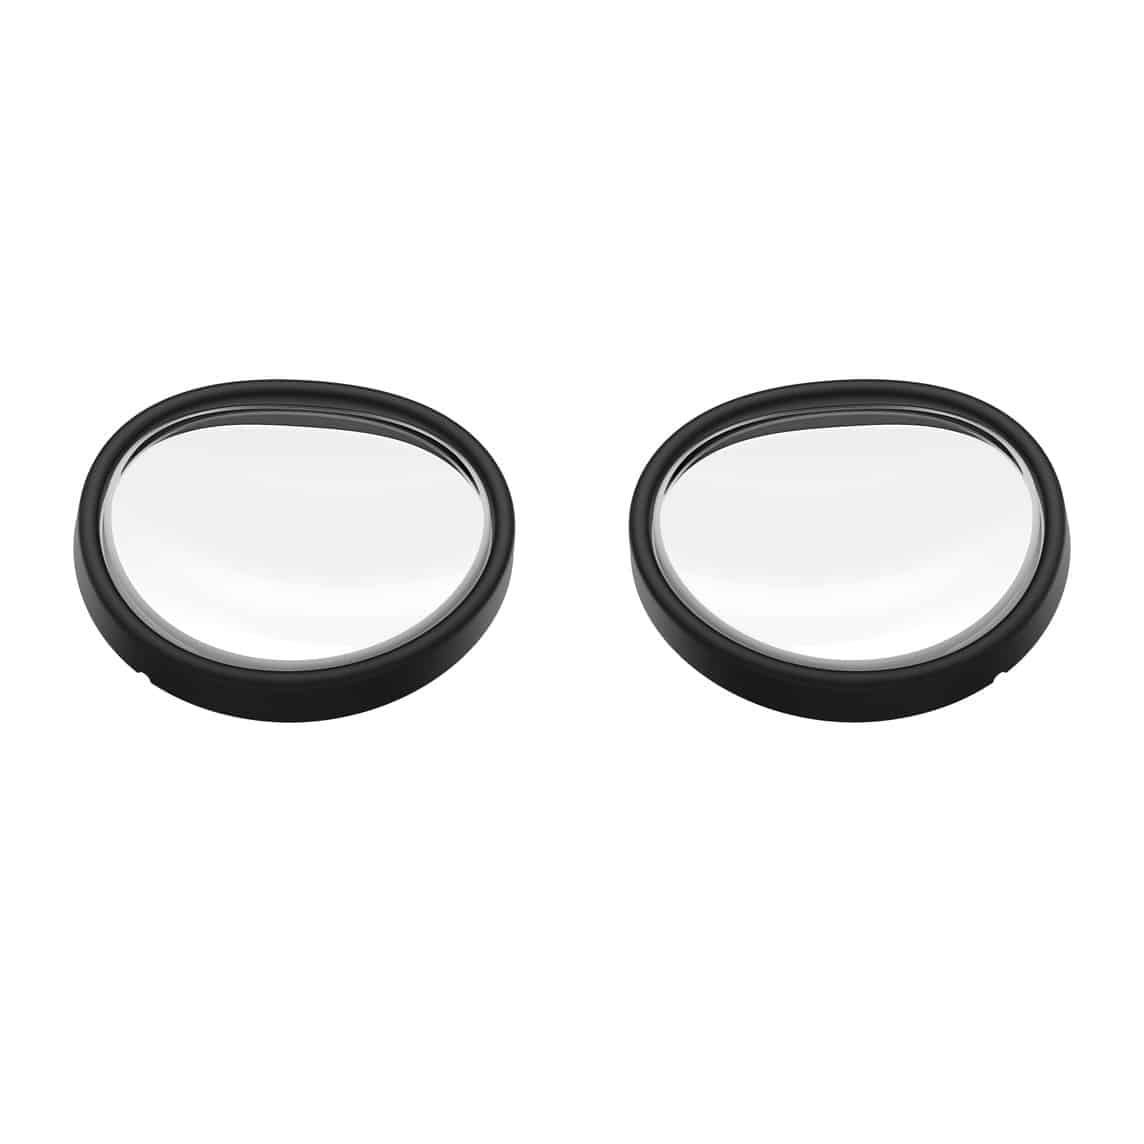 ZEISS-Optical-lenses